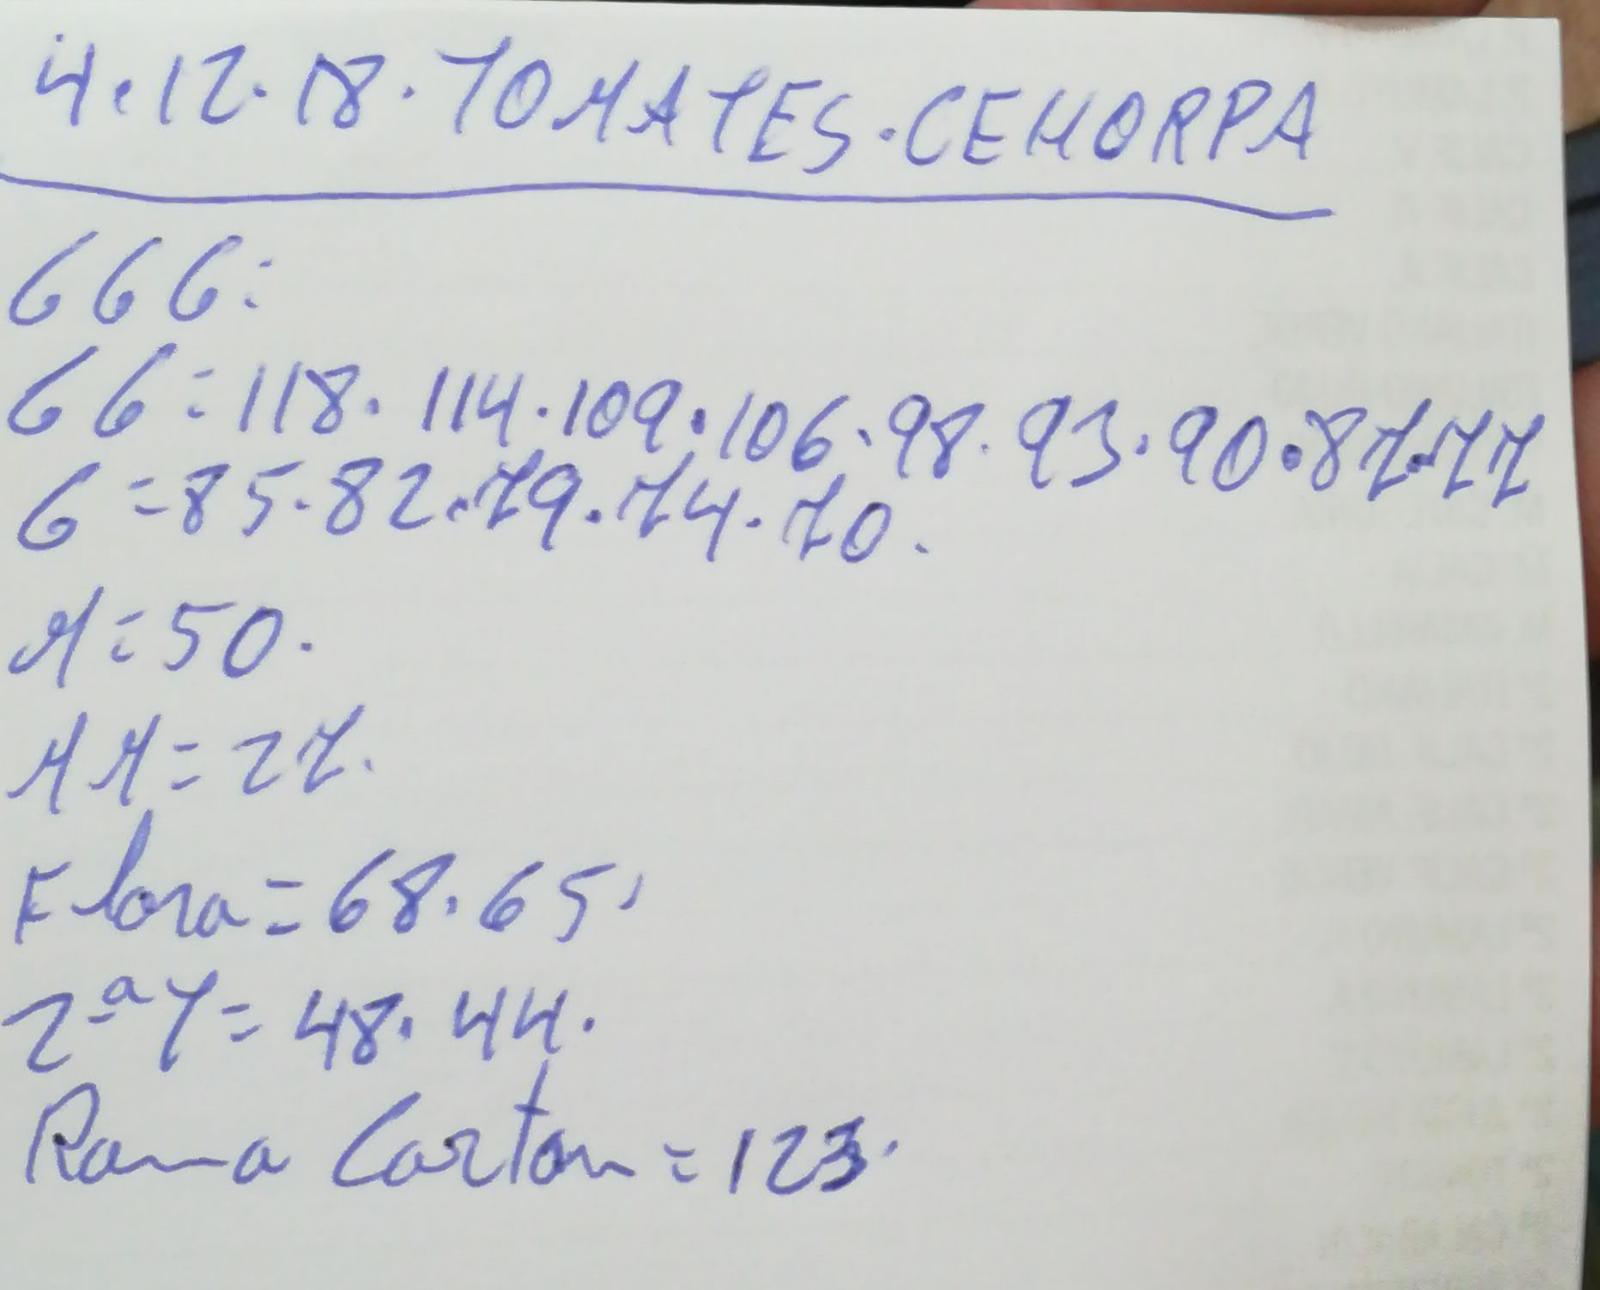 Subasta hortofrutícola Costa de Almería Cehorpa Tomates 4 de Diciembre